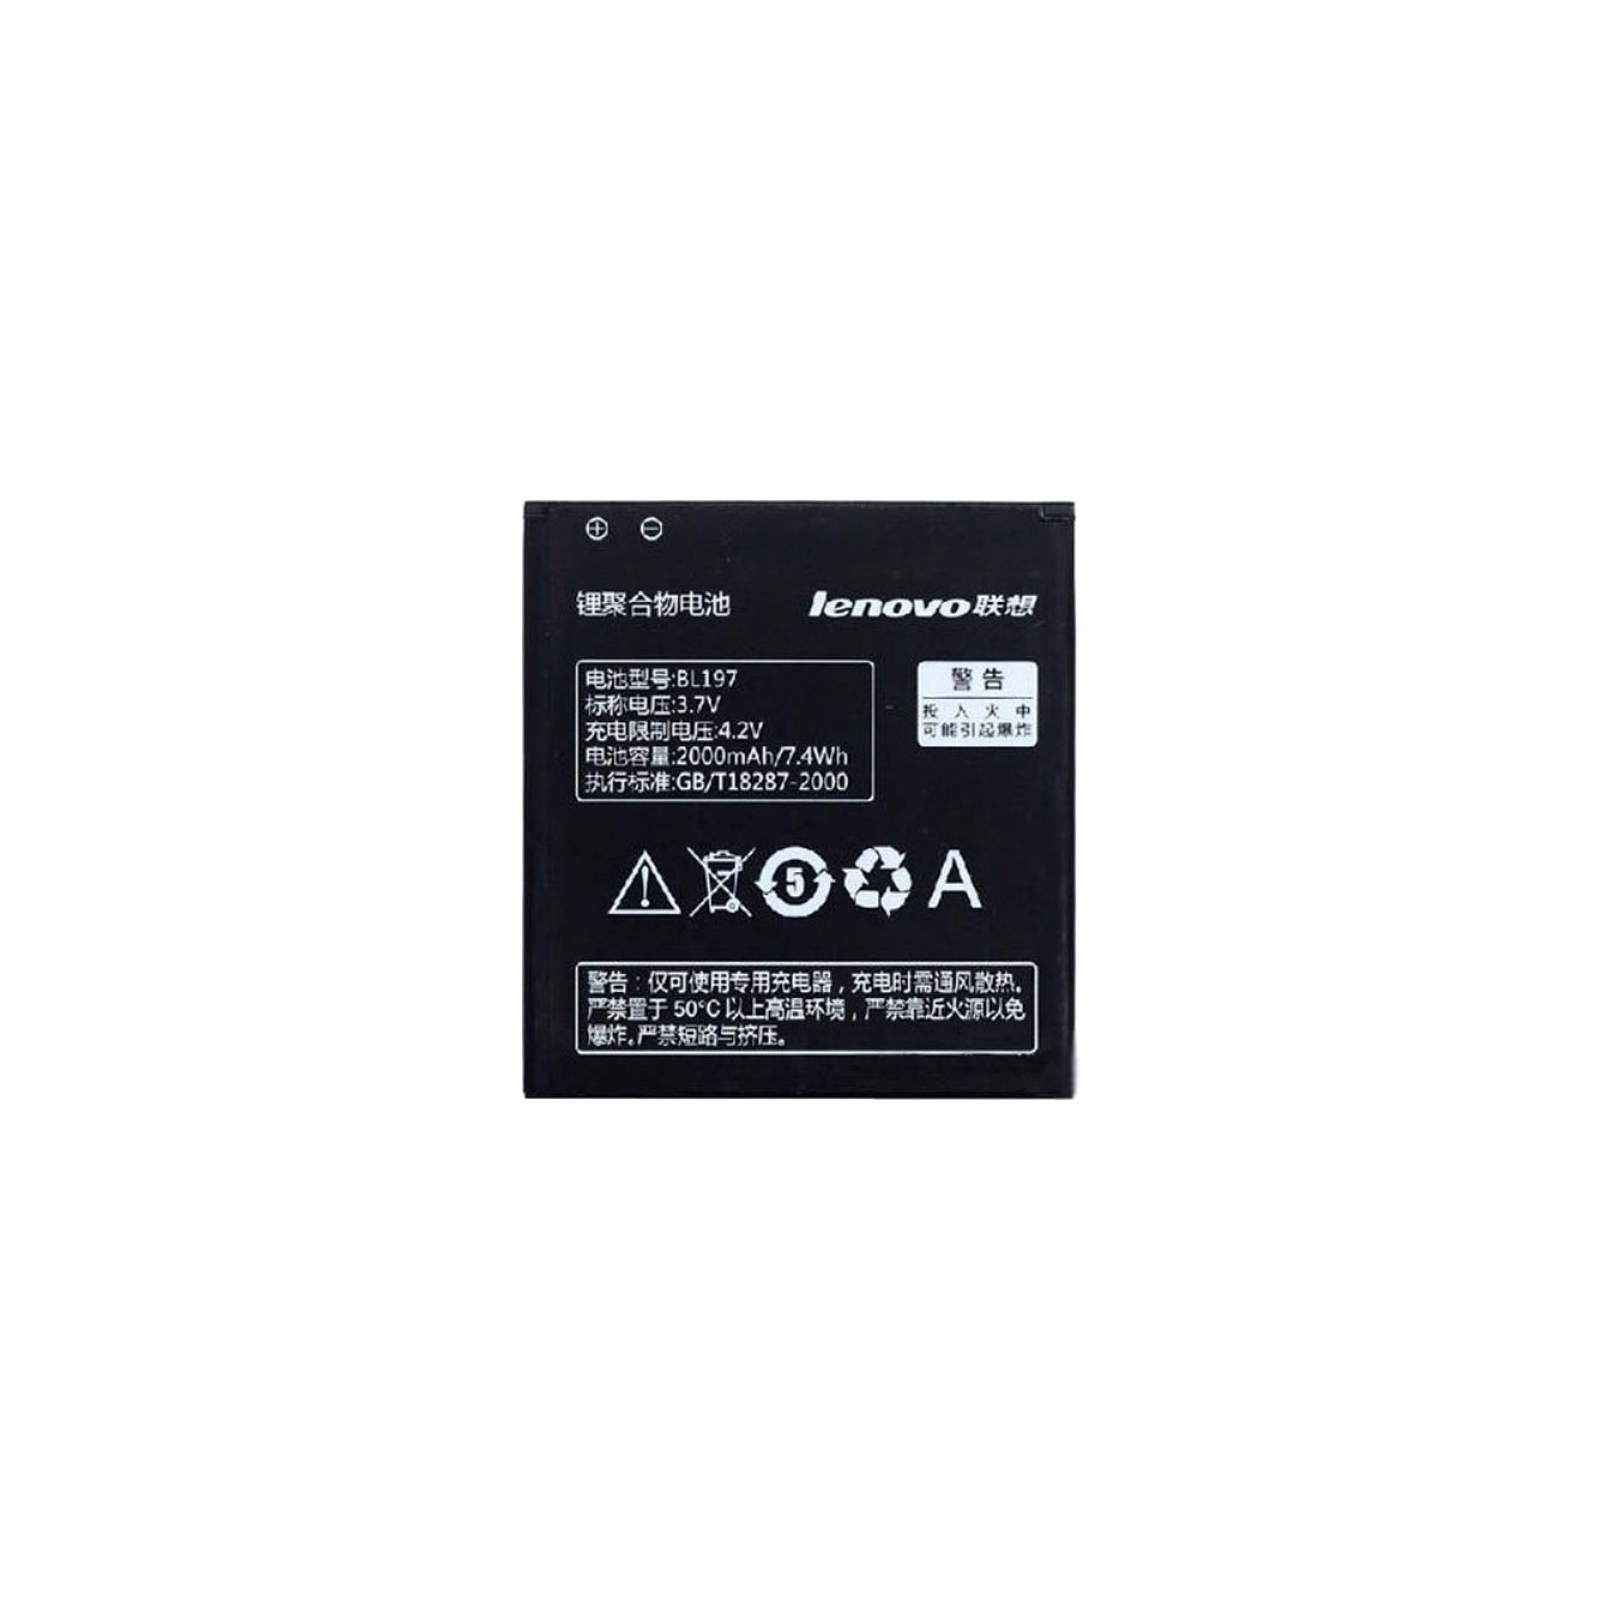 Аккумуляторная батарея Lenovo for S720/S750/S870/A800/A820 (BL-197 / 29721)